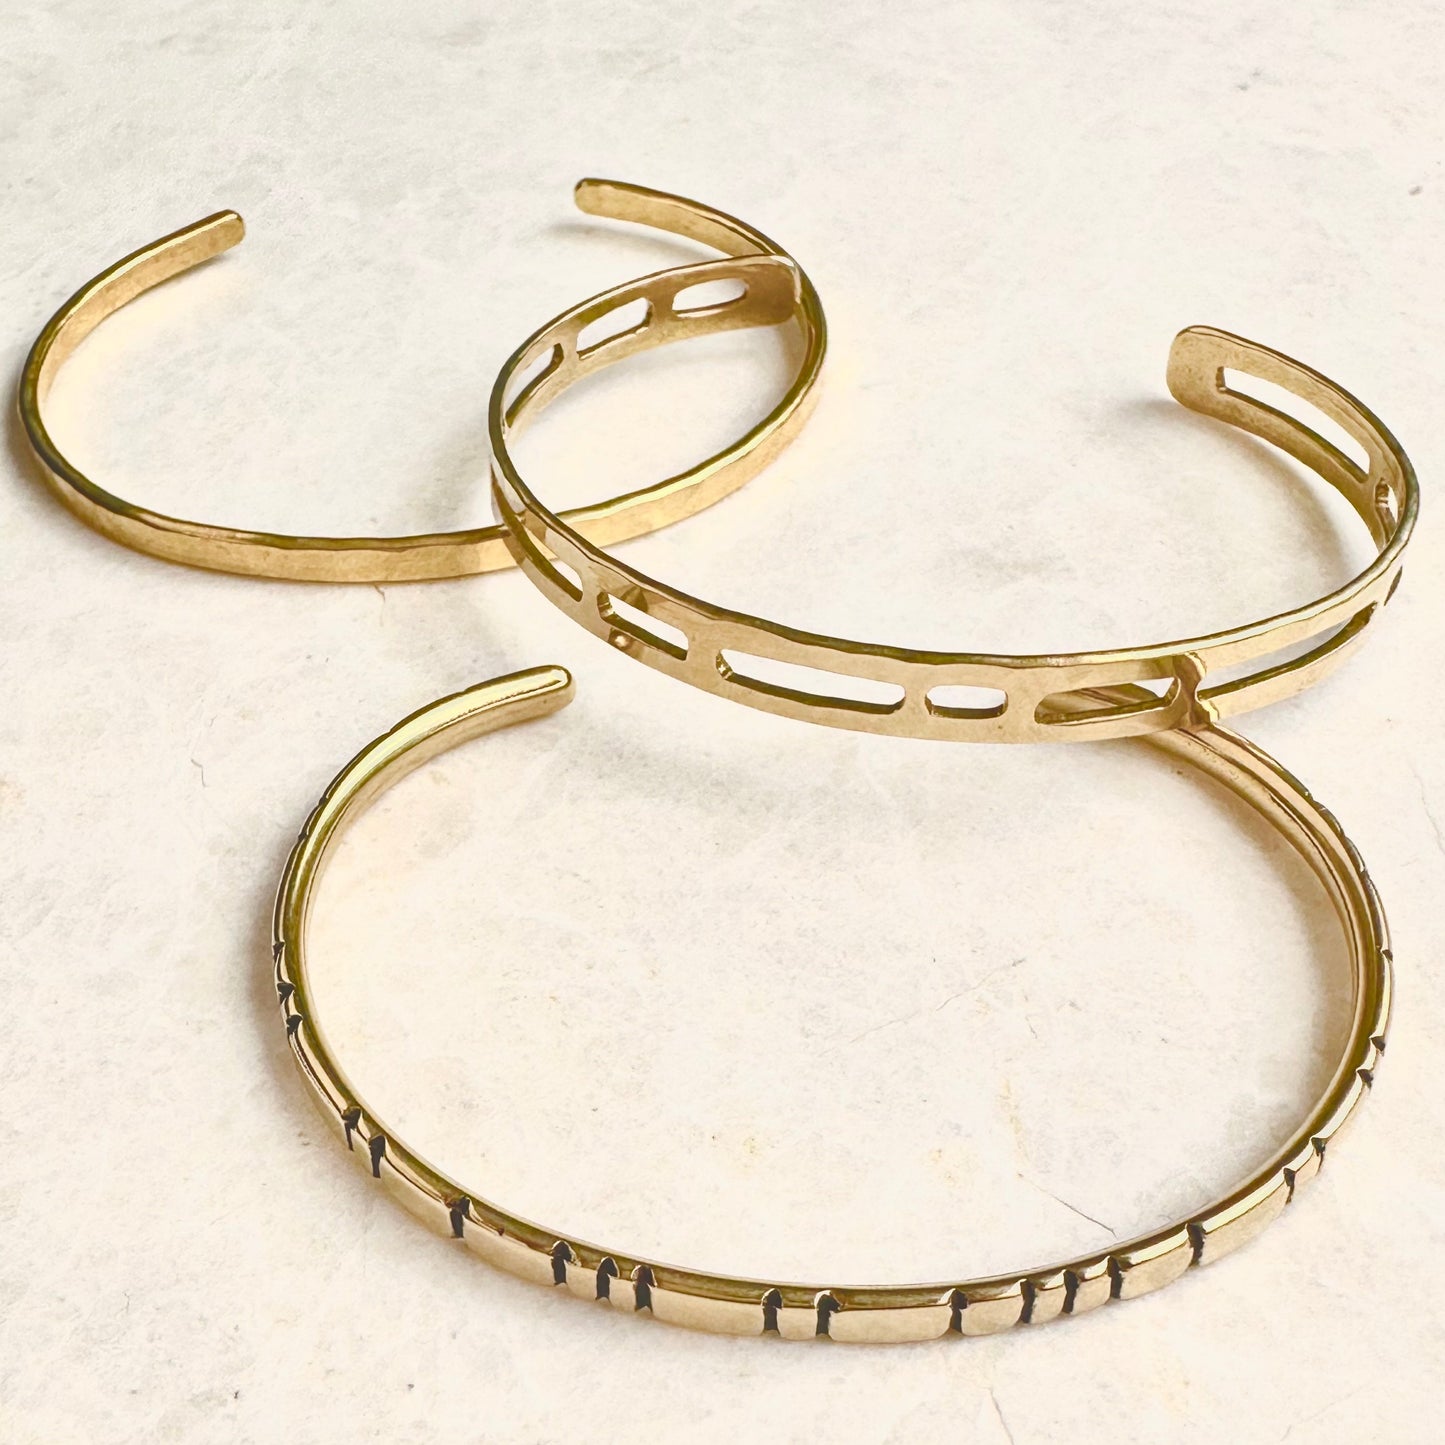 Handmade brass cuff bracelets in different styles.